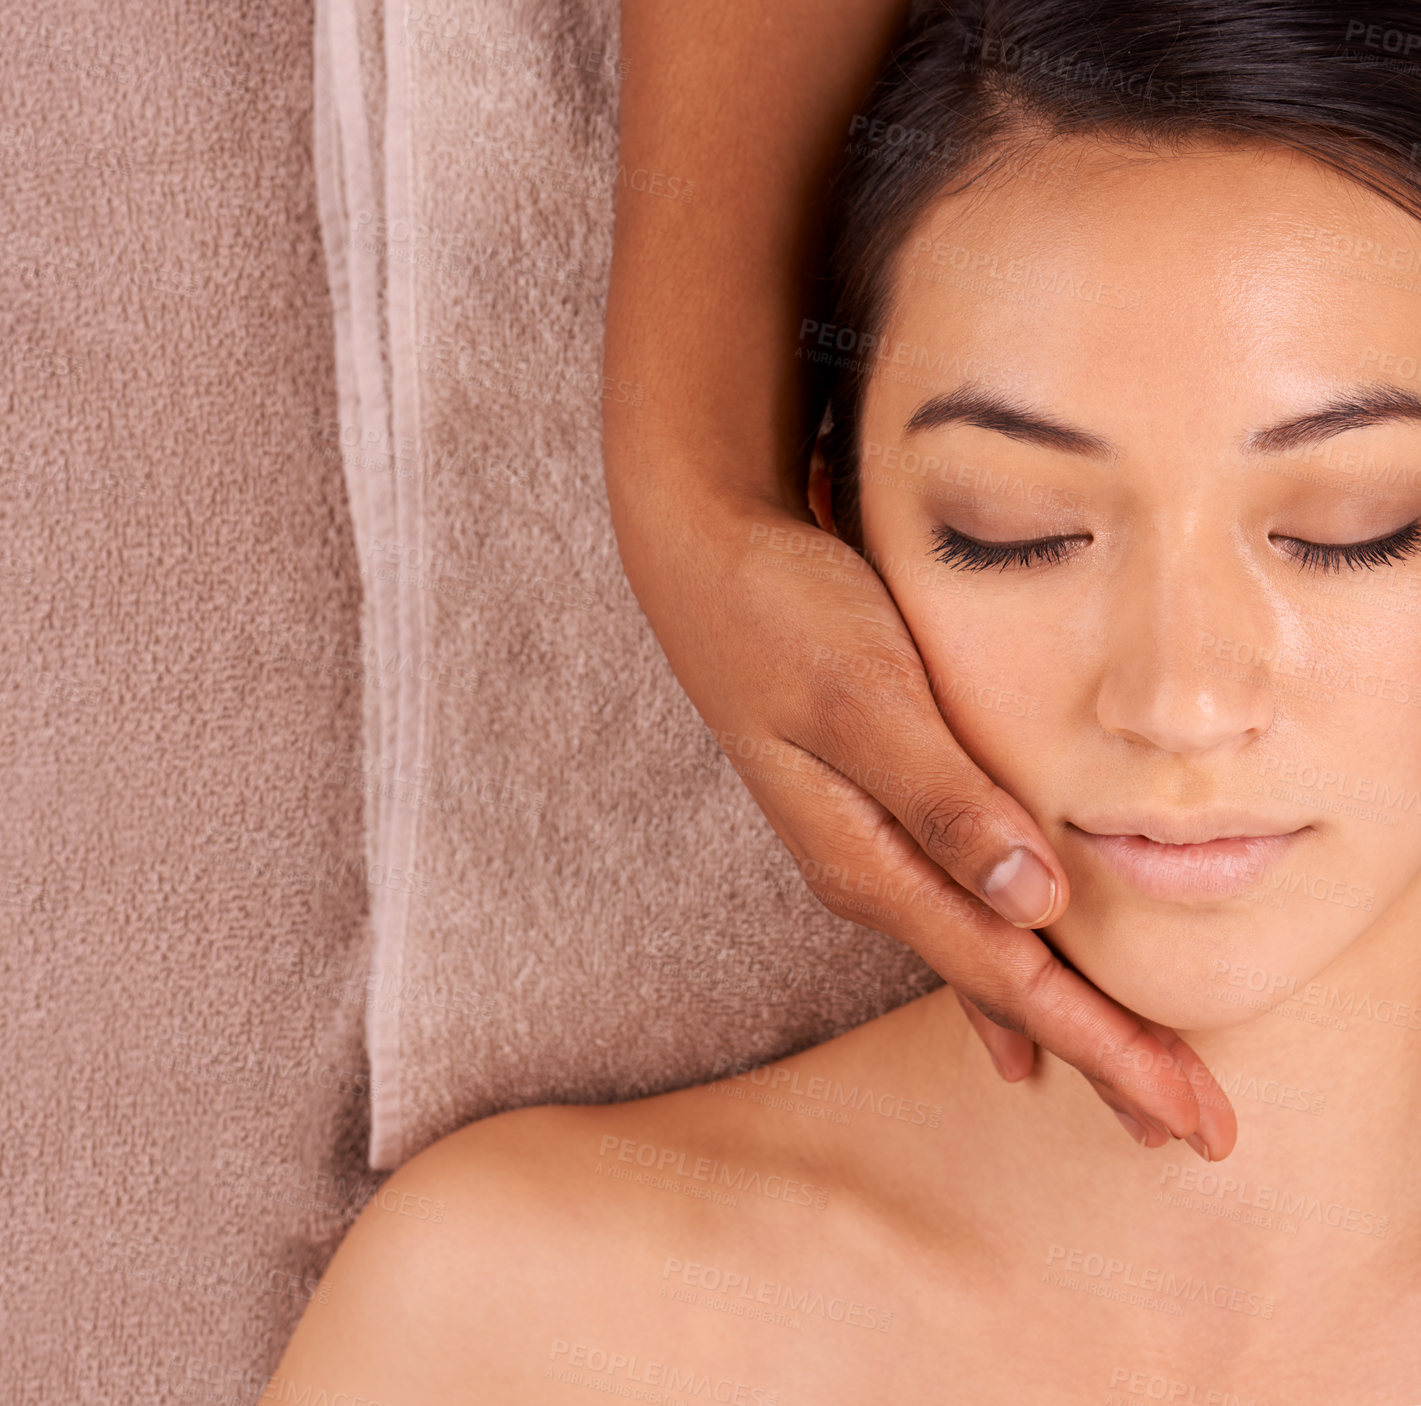 Buy stock photo A beautiful young woman enjoying a massage at the spa